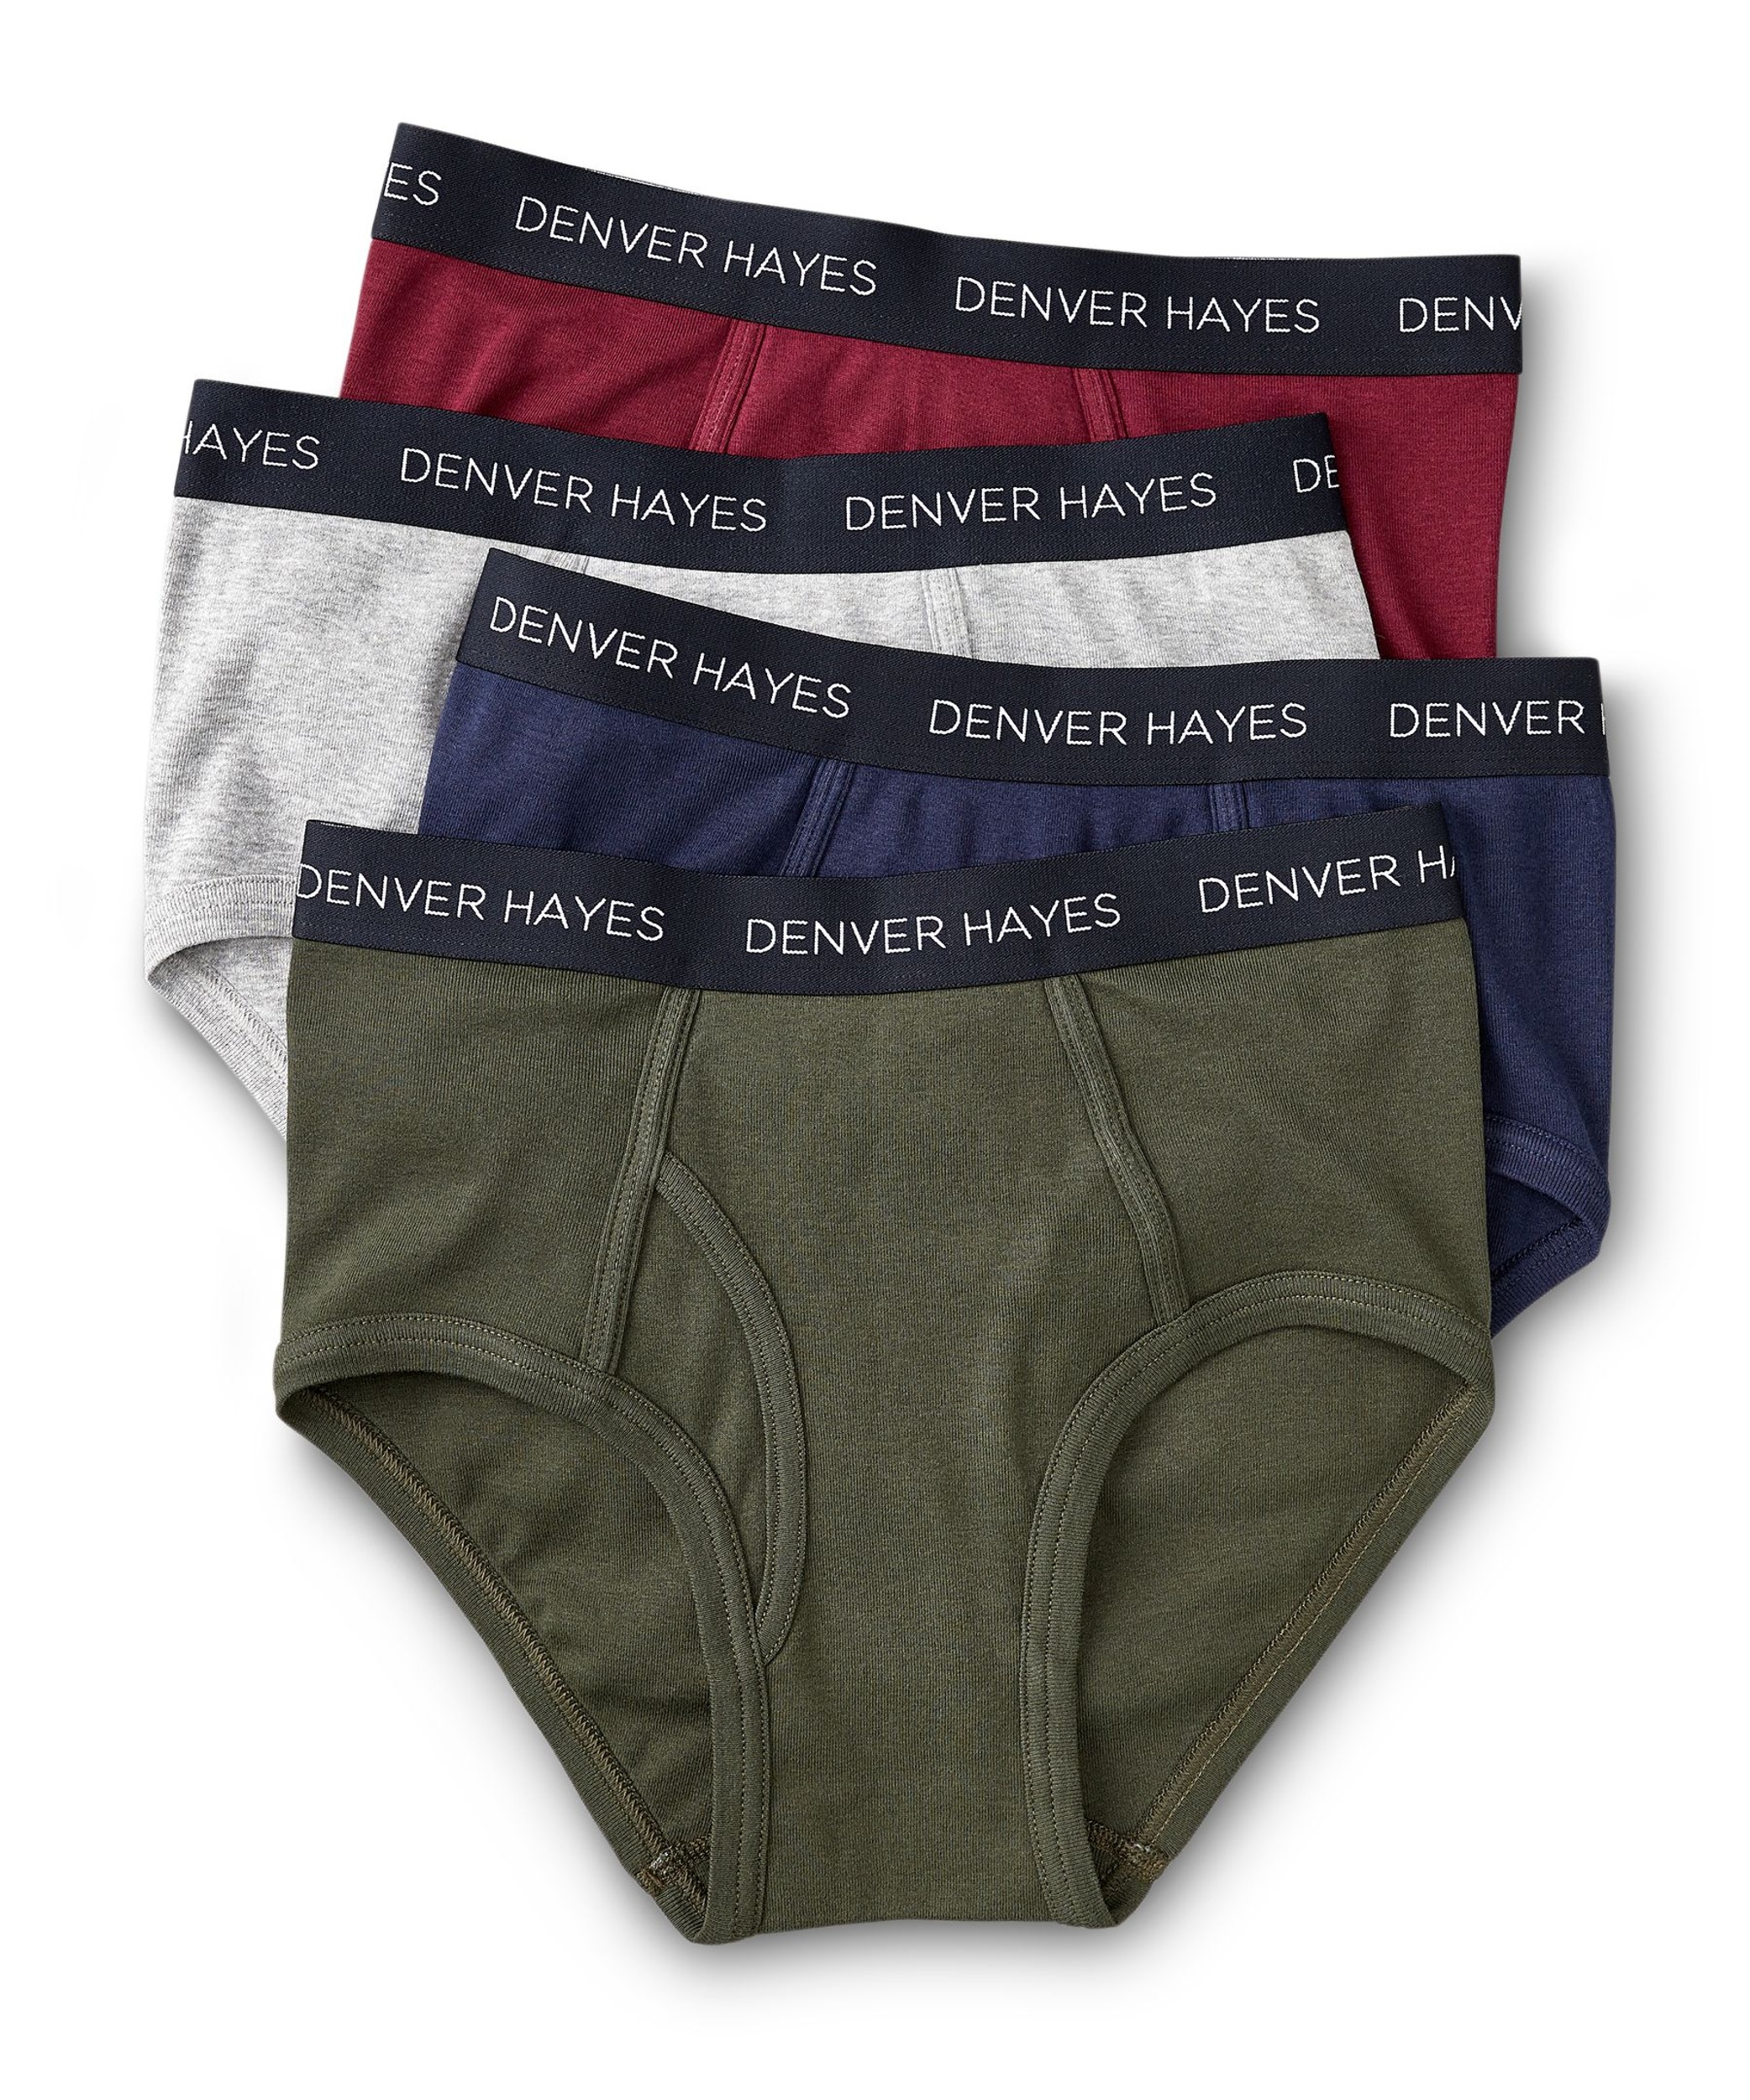 Denver Hayes Men's 4 Pack Classic Briefs | Marks